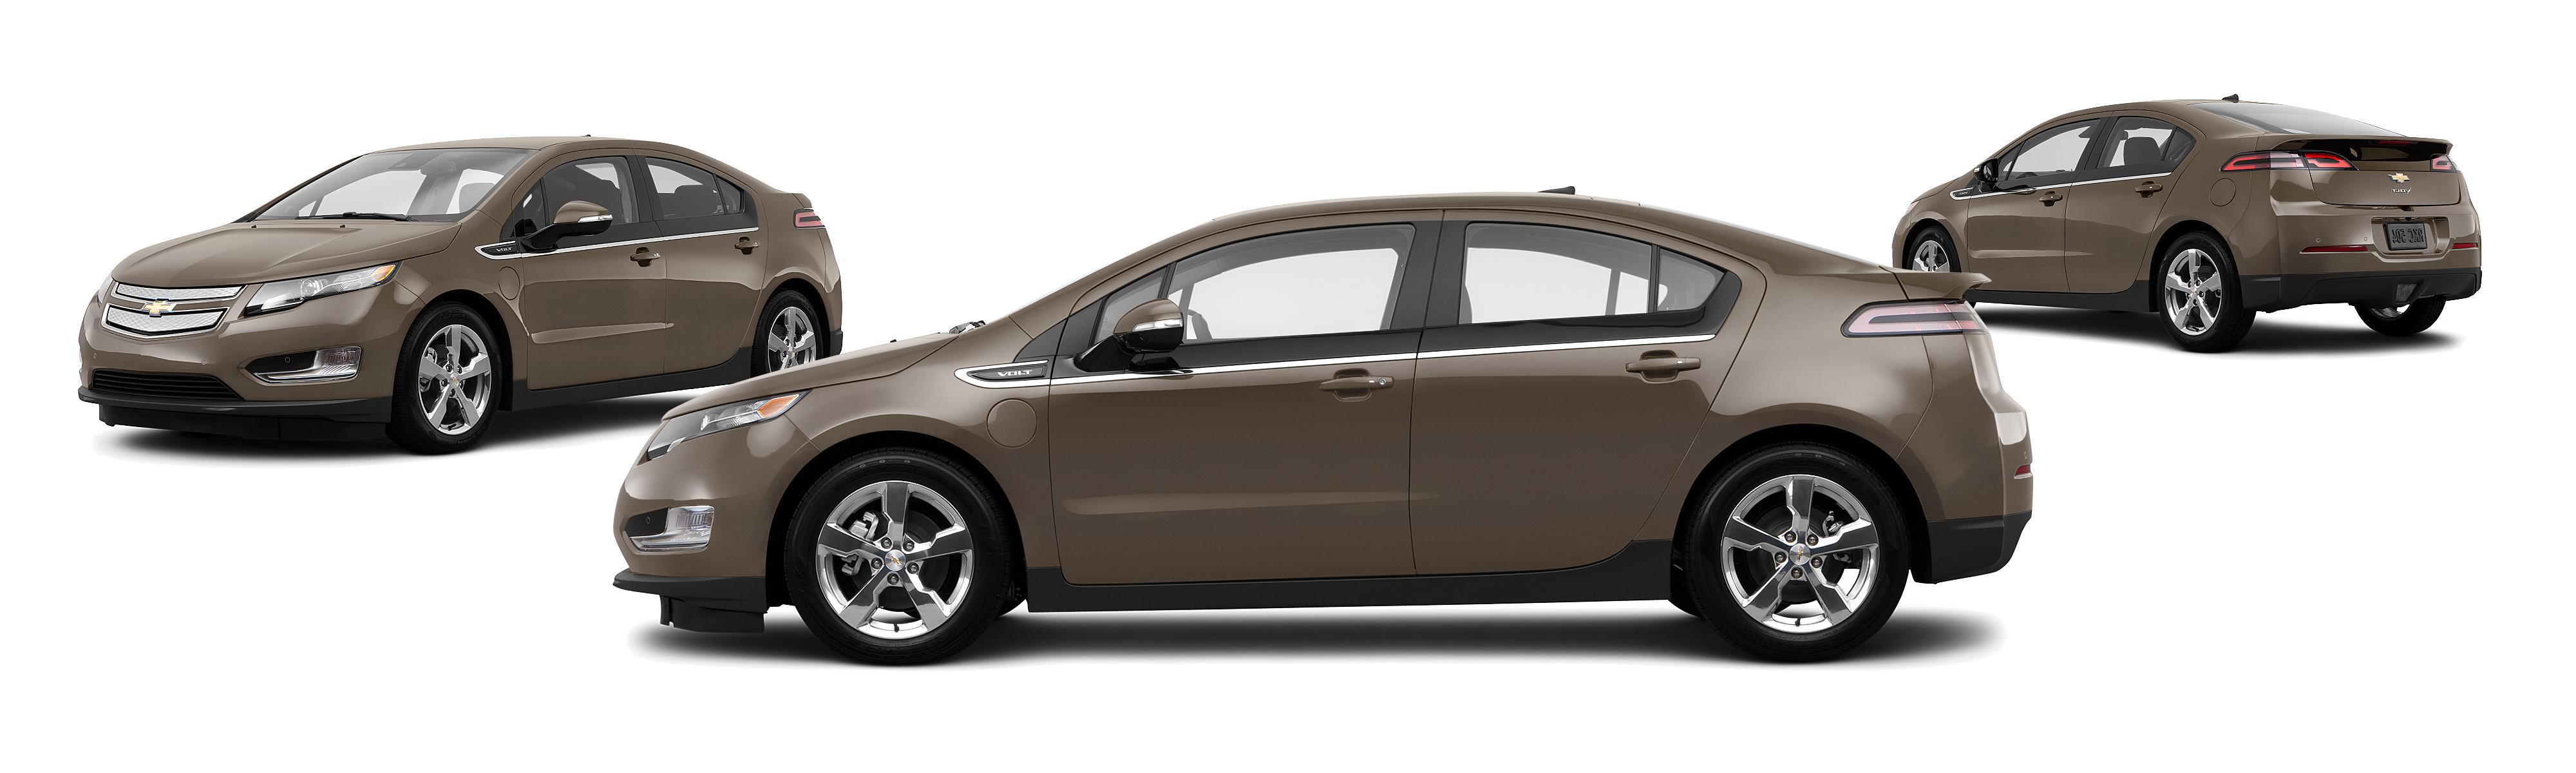 2014 Chevrolet Volt Premium 4dr Hatchback - Research - GrooveCar